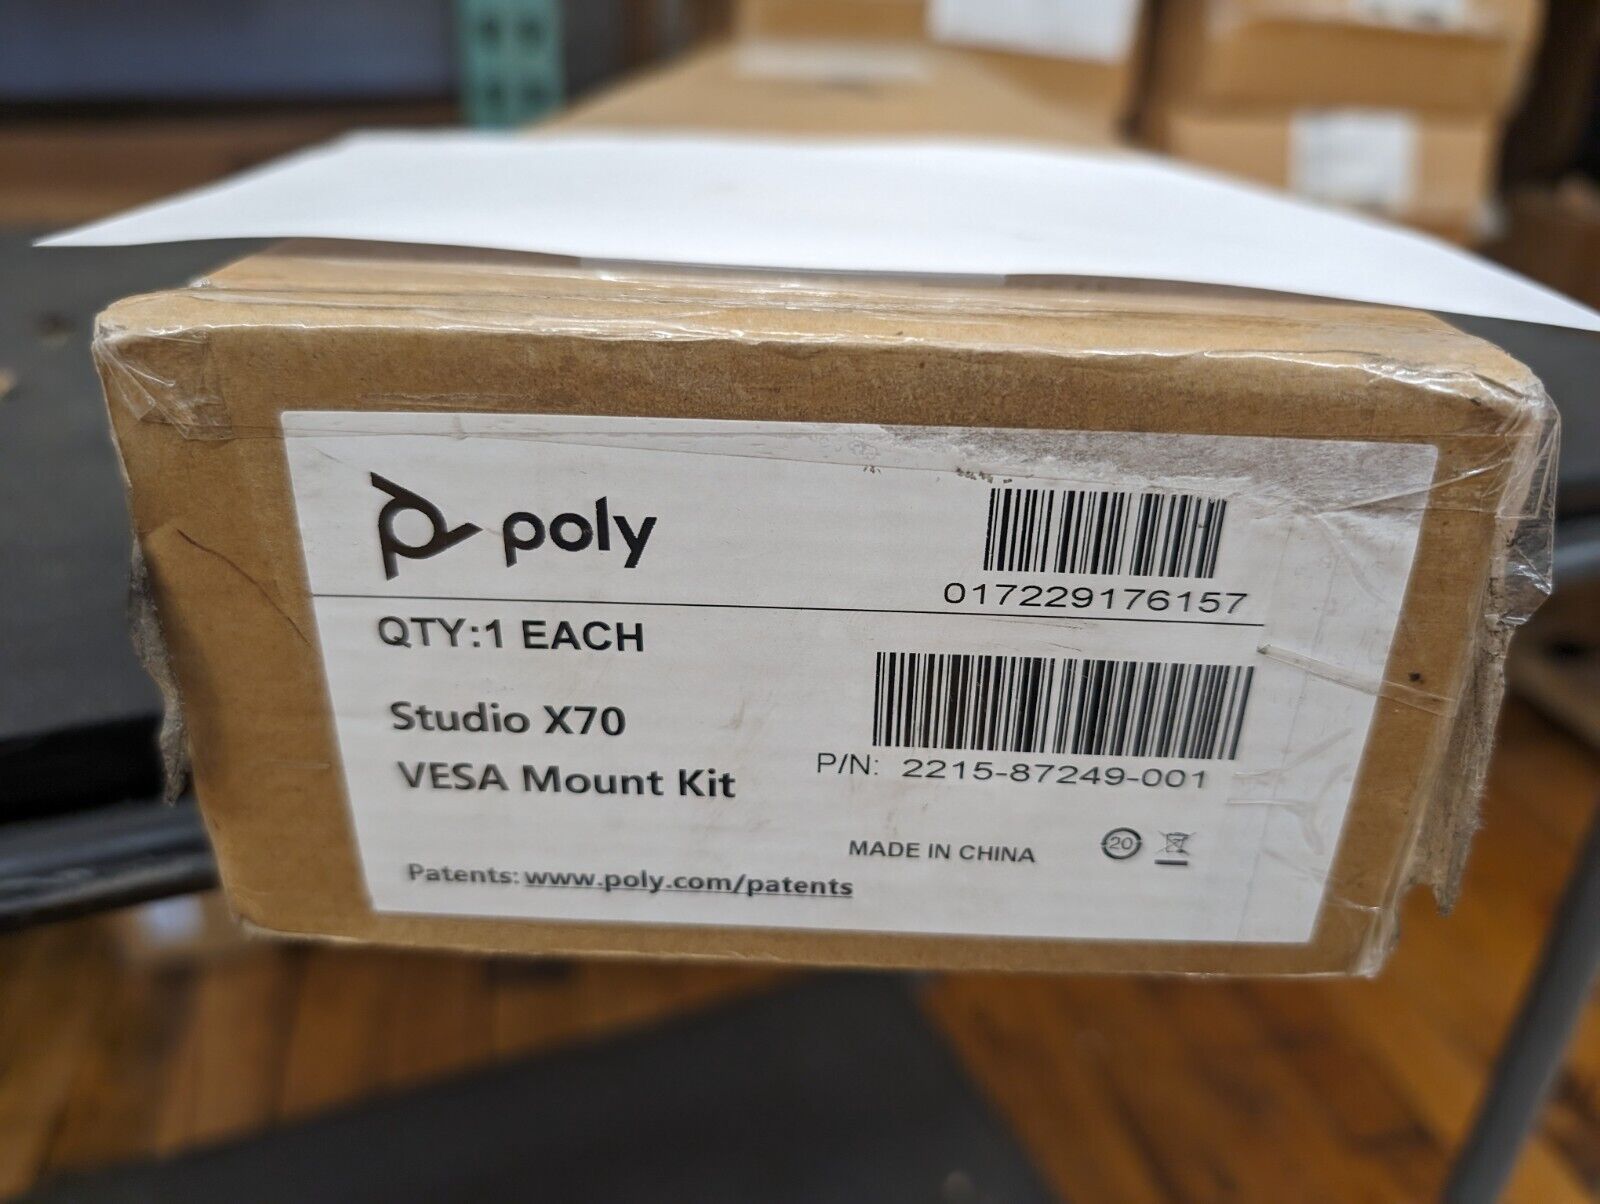 New, Poly, 2215-87249-001, Poly Studio X70 Optional Vesa Mounting Kit